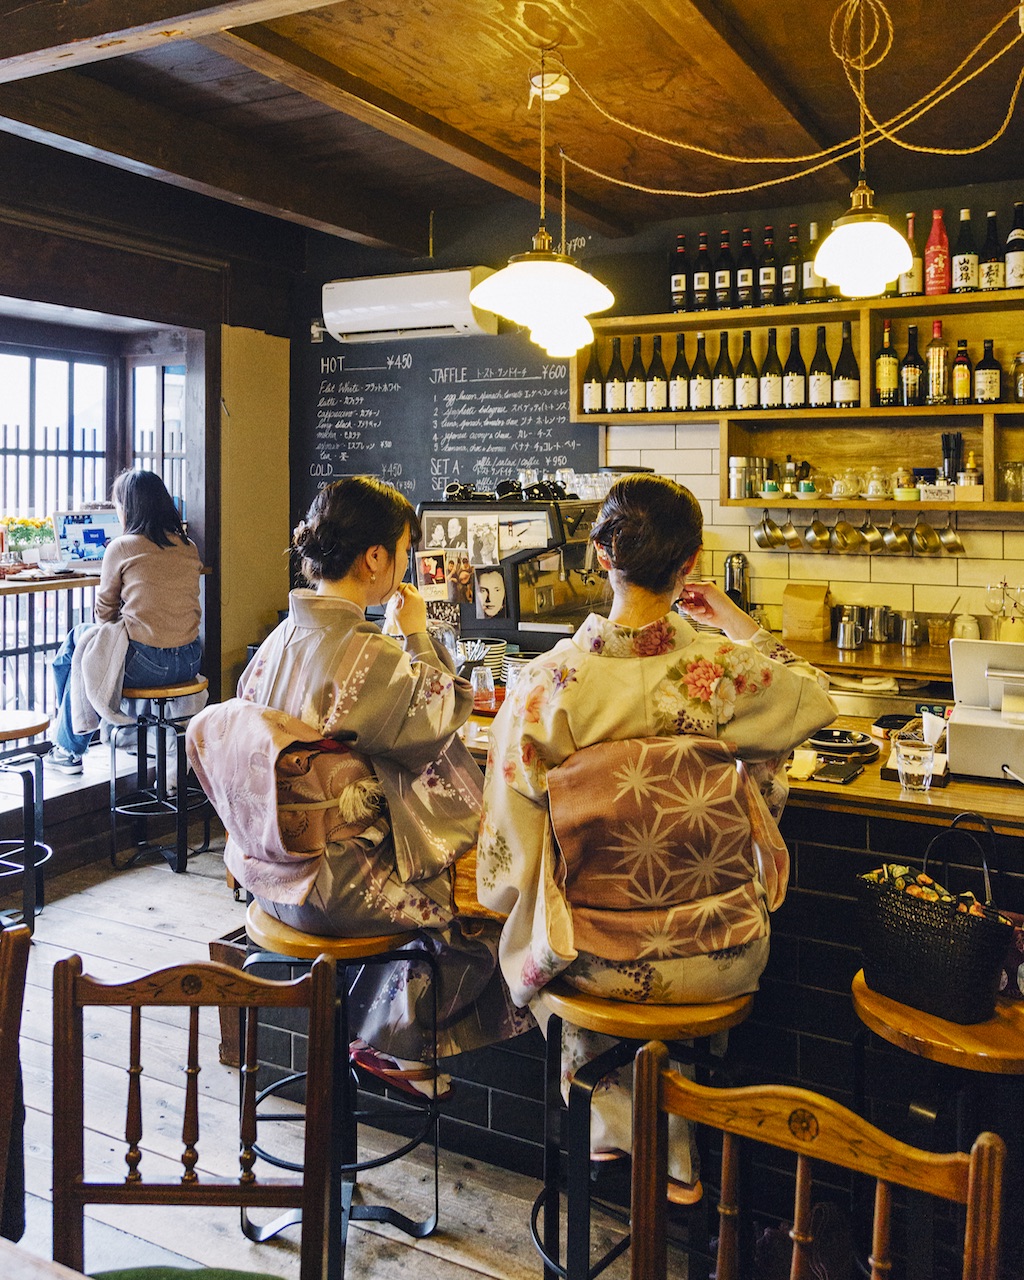 Kyoto, Japan - Jam Jar Cafe and Lounge in the Kitano neighborhood